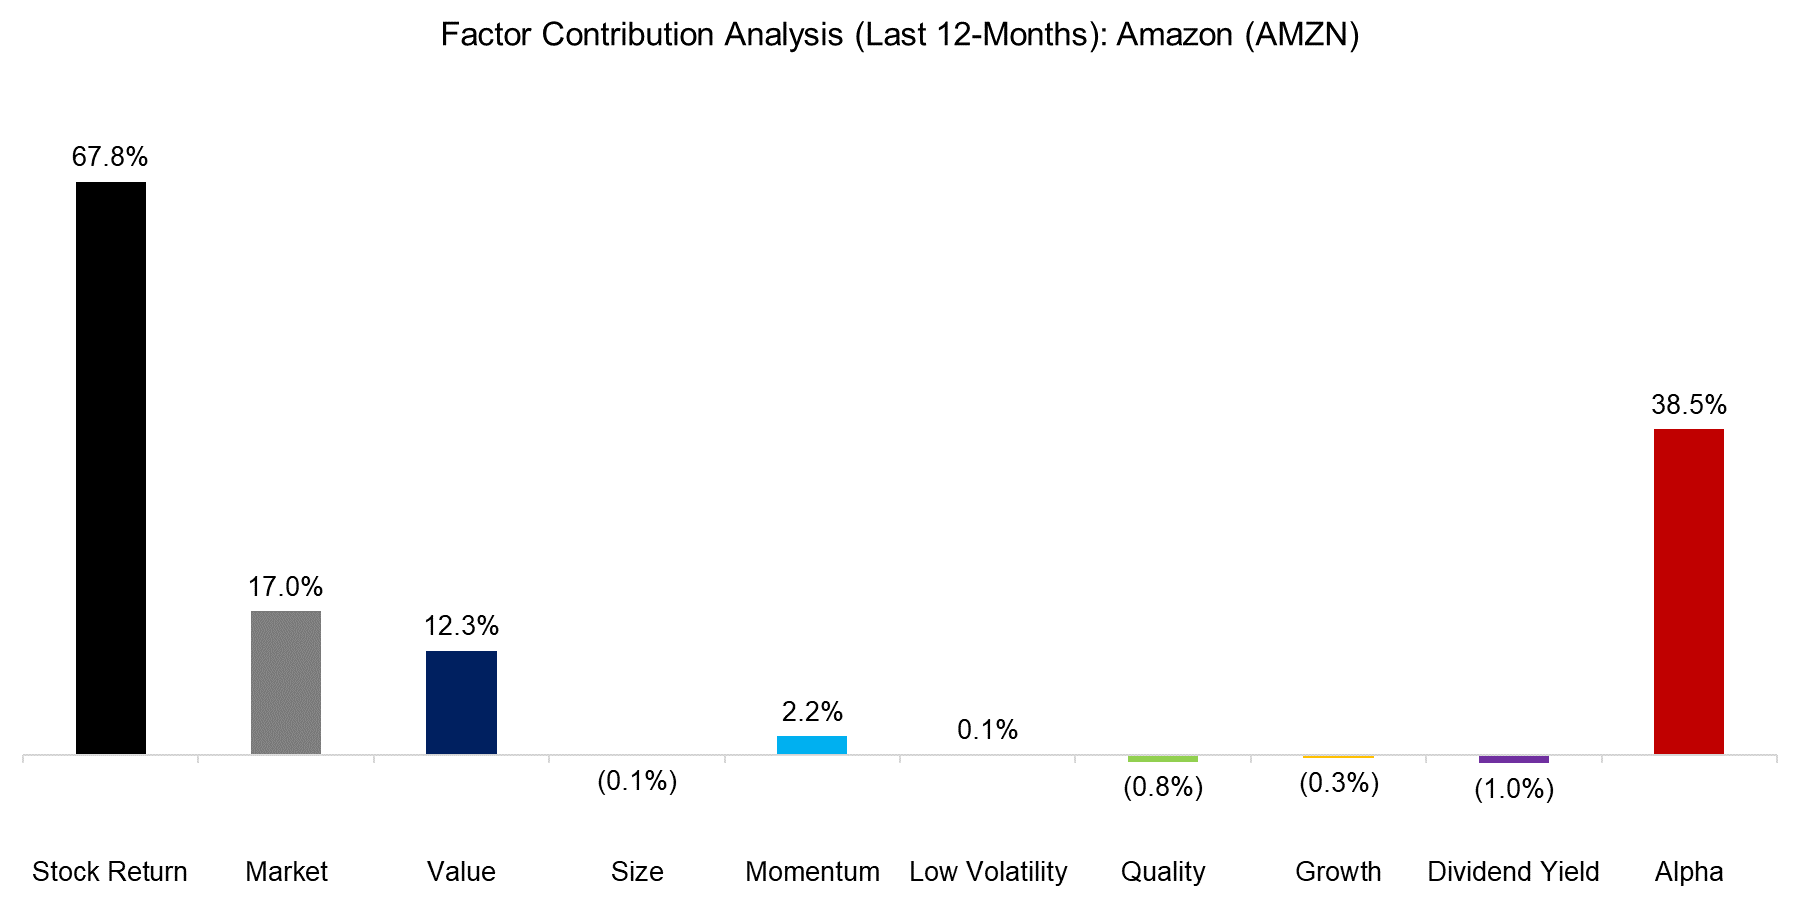 Factor Contribution Analysis (Last 12-Months) Amazon (AMZN)